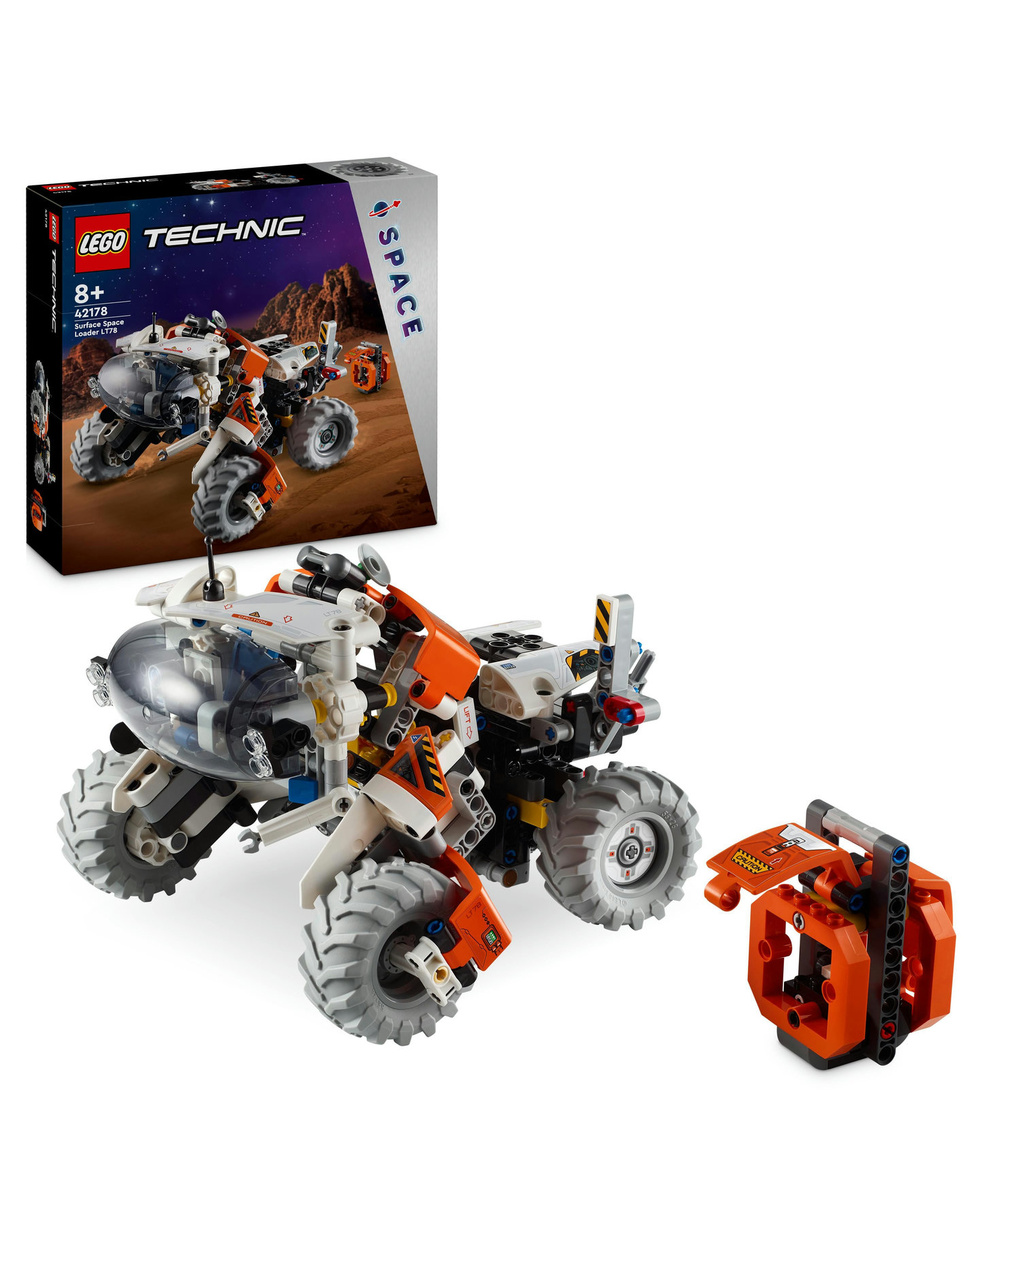 Lt78 cargador espacial - 42178 - lego technic - LEGO